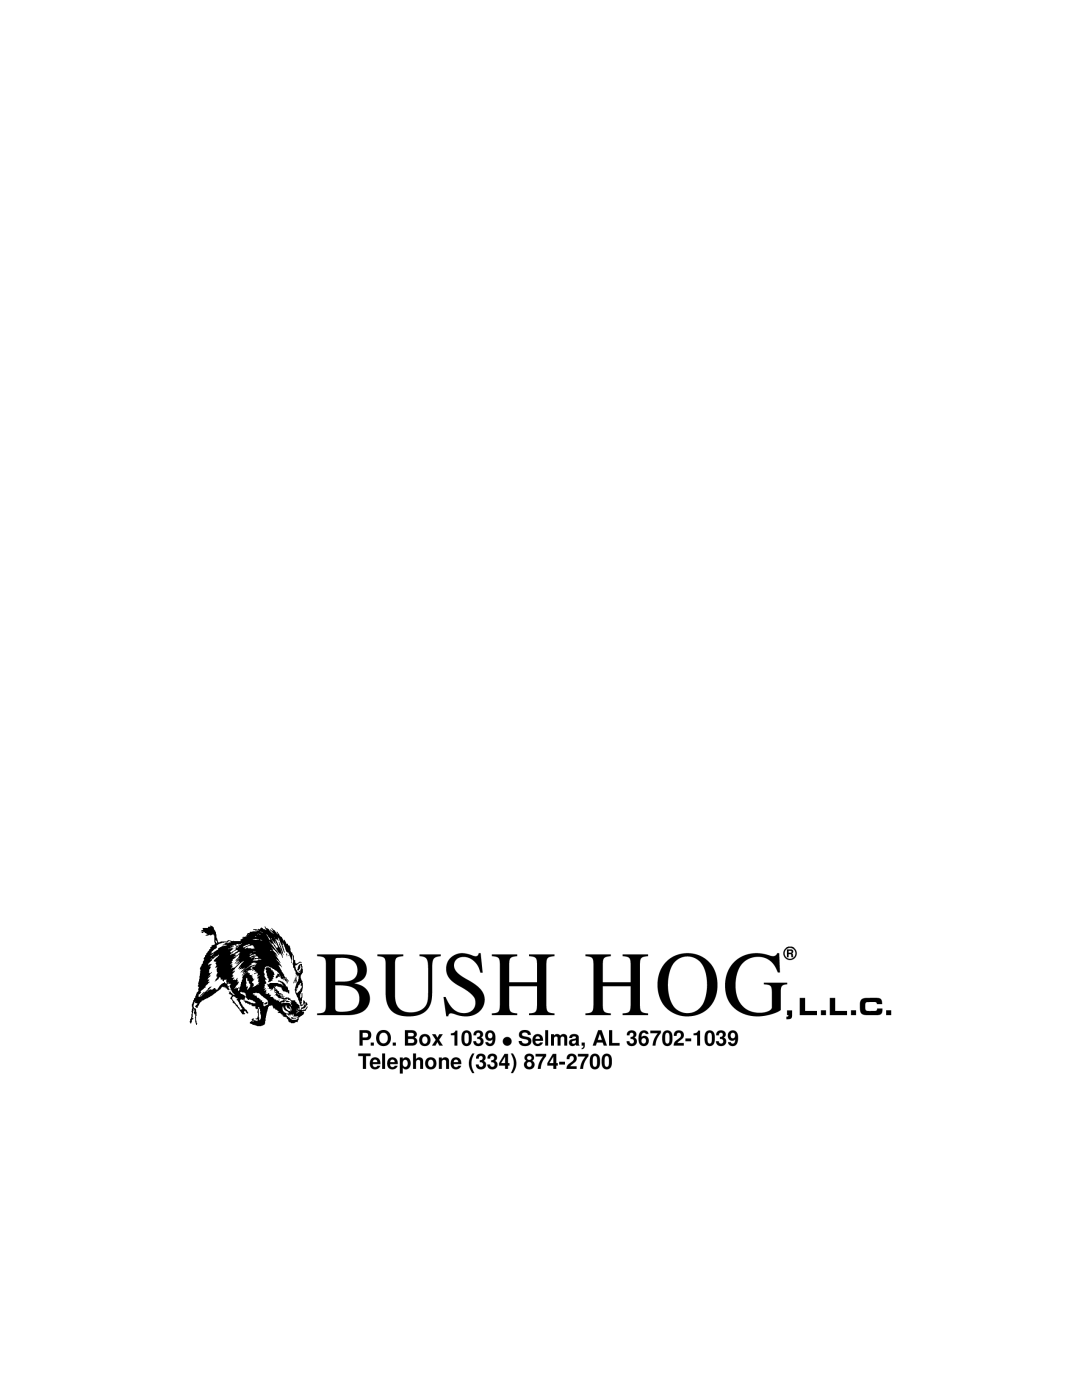 Bush Hog Estate Series manual P.O. Box 1039 Selma, AL Telephone, Bush Hog, L.L.C 